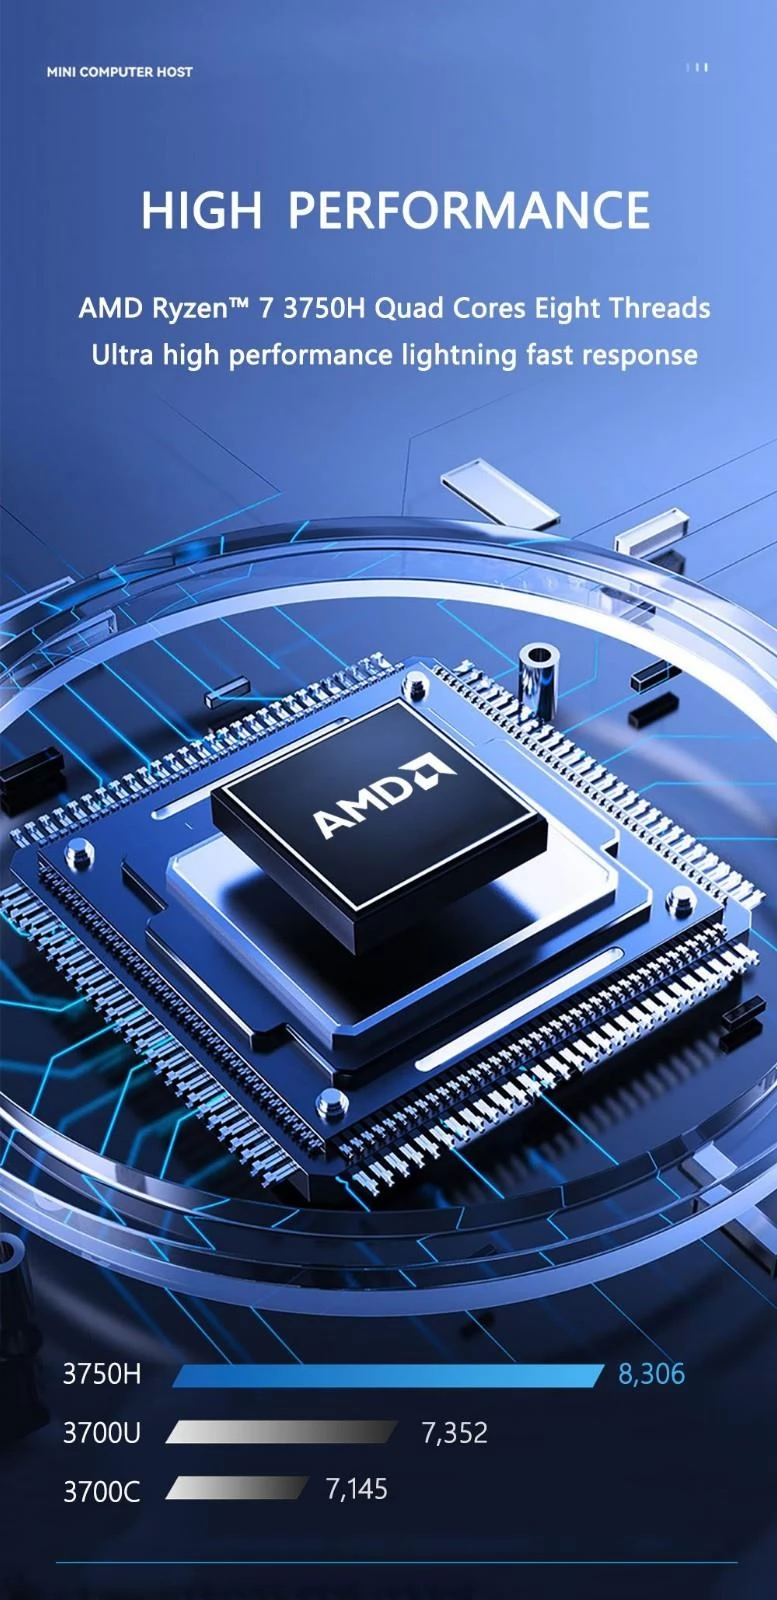 KUU Mingar 3 MINI PC AMD Ryzen 7 3750H Processor up to 4.0 GHz, 8GB DDR4 512GB SSD, Windows 10, BT5.0, 2.4/5G WiFi